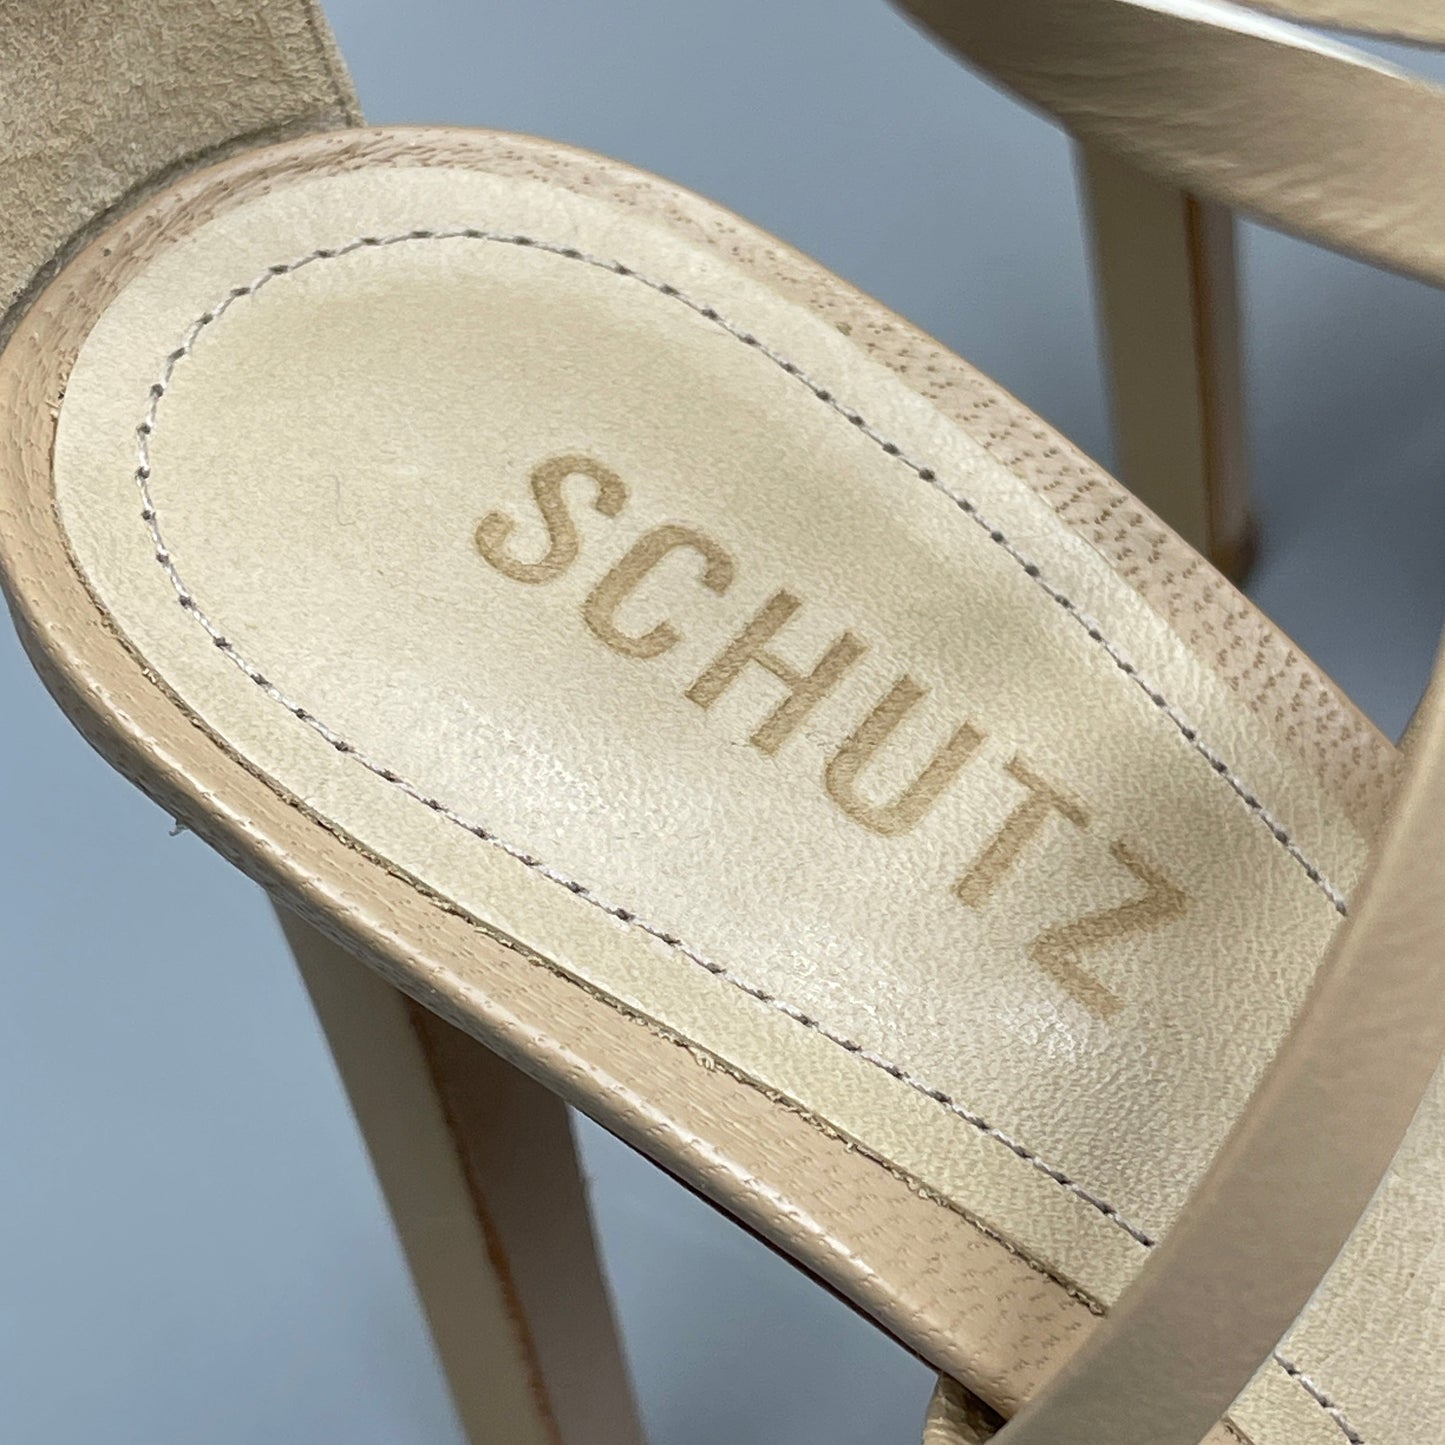 SCHUTZ Bryce Ankle Tie Women's Leather High Heel Strappy Sandal Light Nude Sz 10.5B (New)